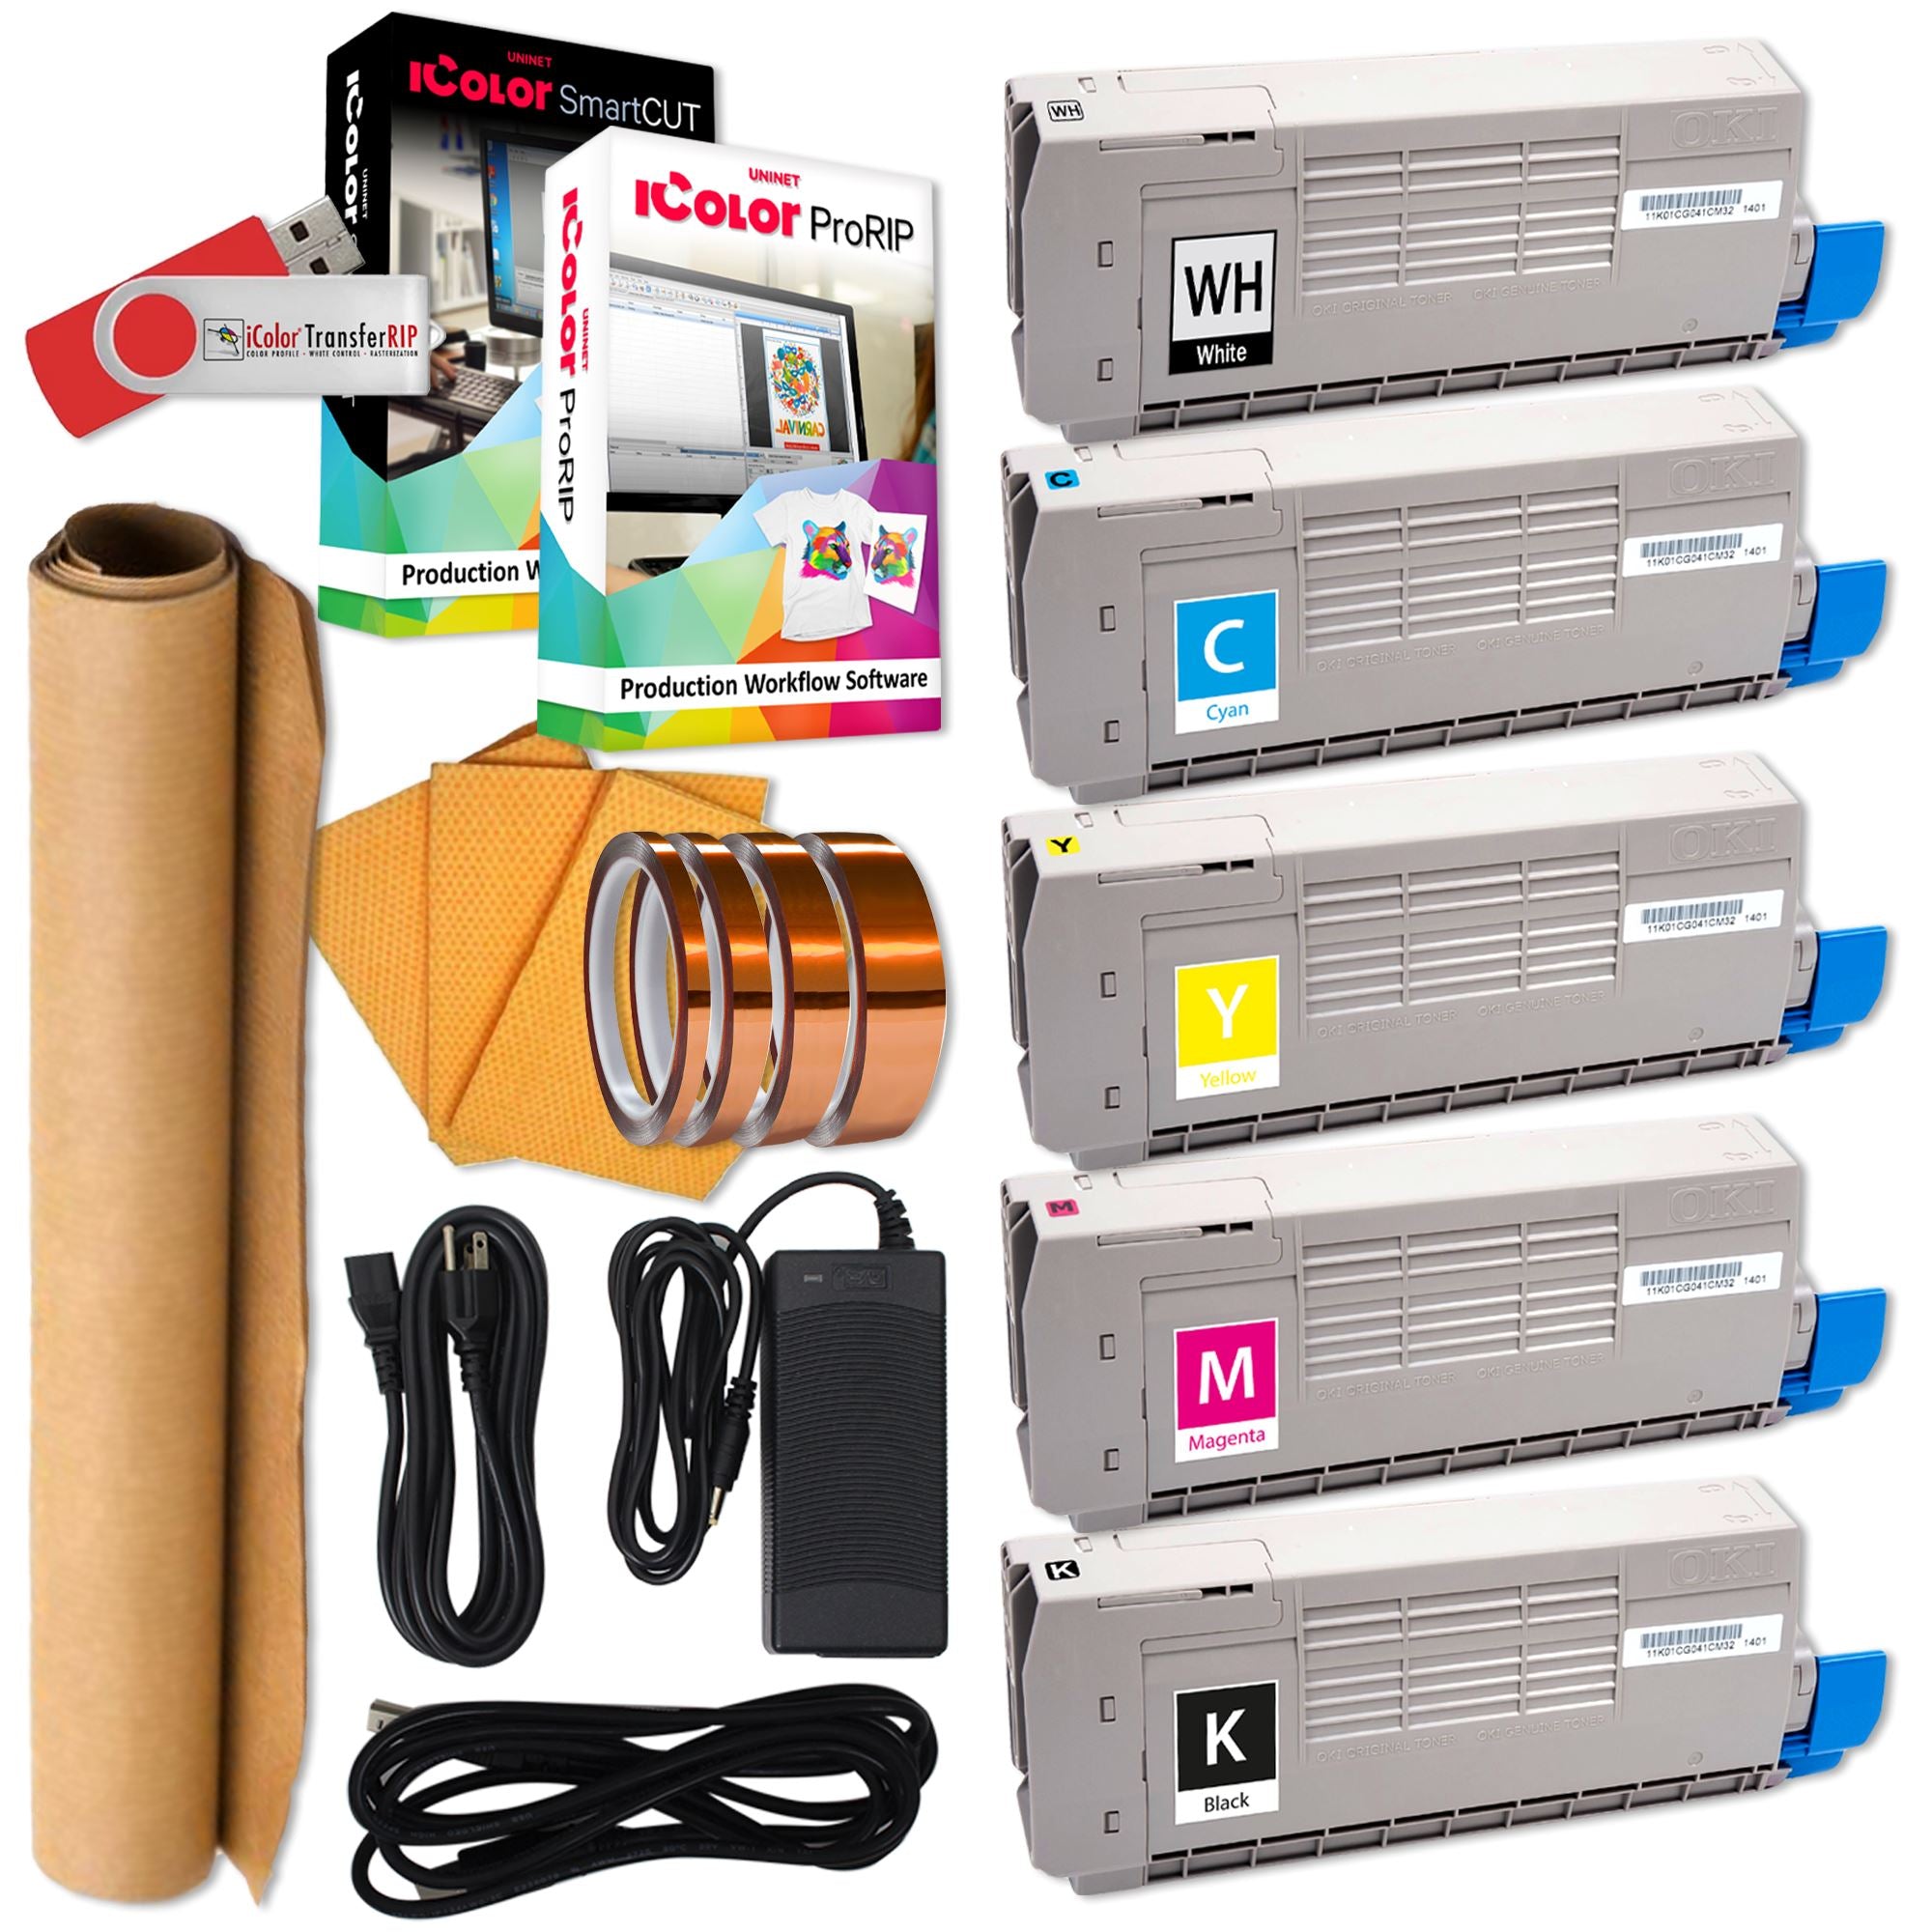 Uninet iColor 560 White Toner Transfer Printer Pro Package (Optional Heat Press) iColor 560 Pro Toner Package : Garment Printer Ink